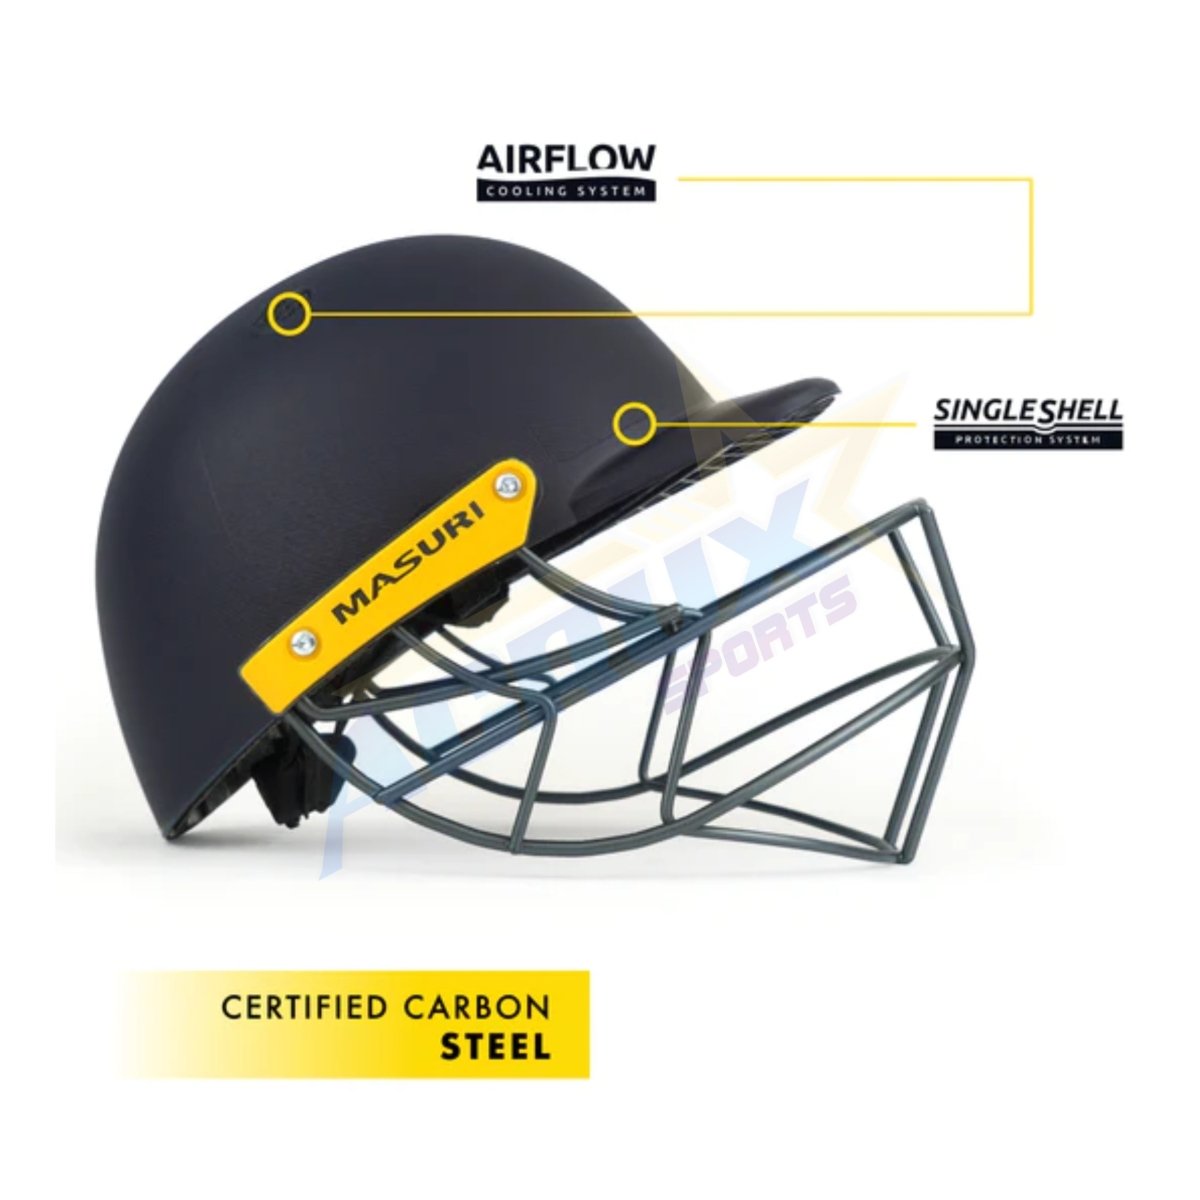 Masuri C Line Steel Junior Cricket Helmet